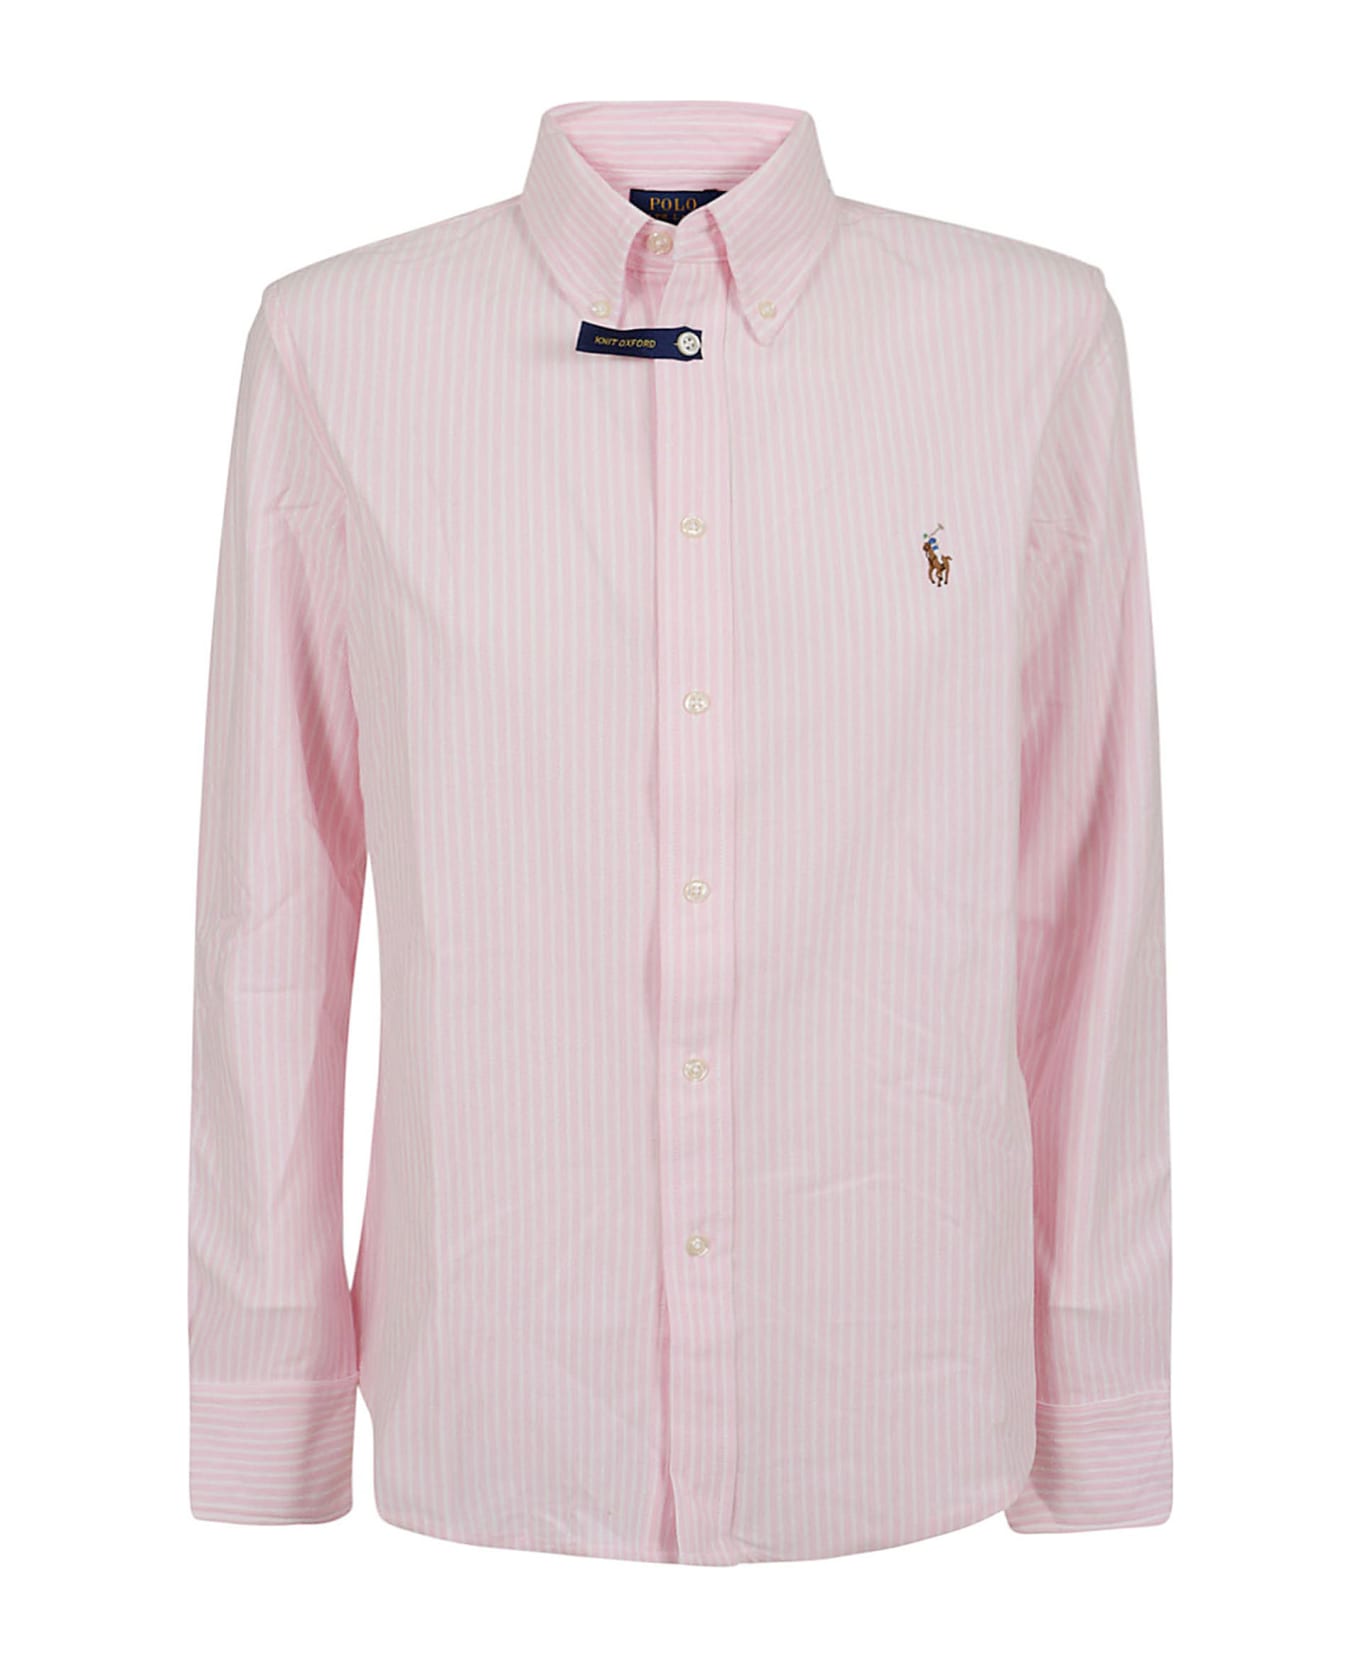 Polo Ralph Lauren Striped Long-sleeved Shirt - Carmel Pink White シャツ